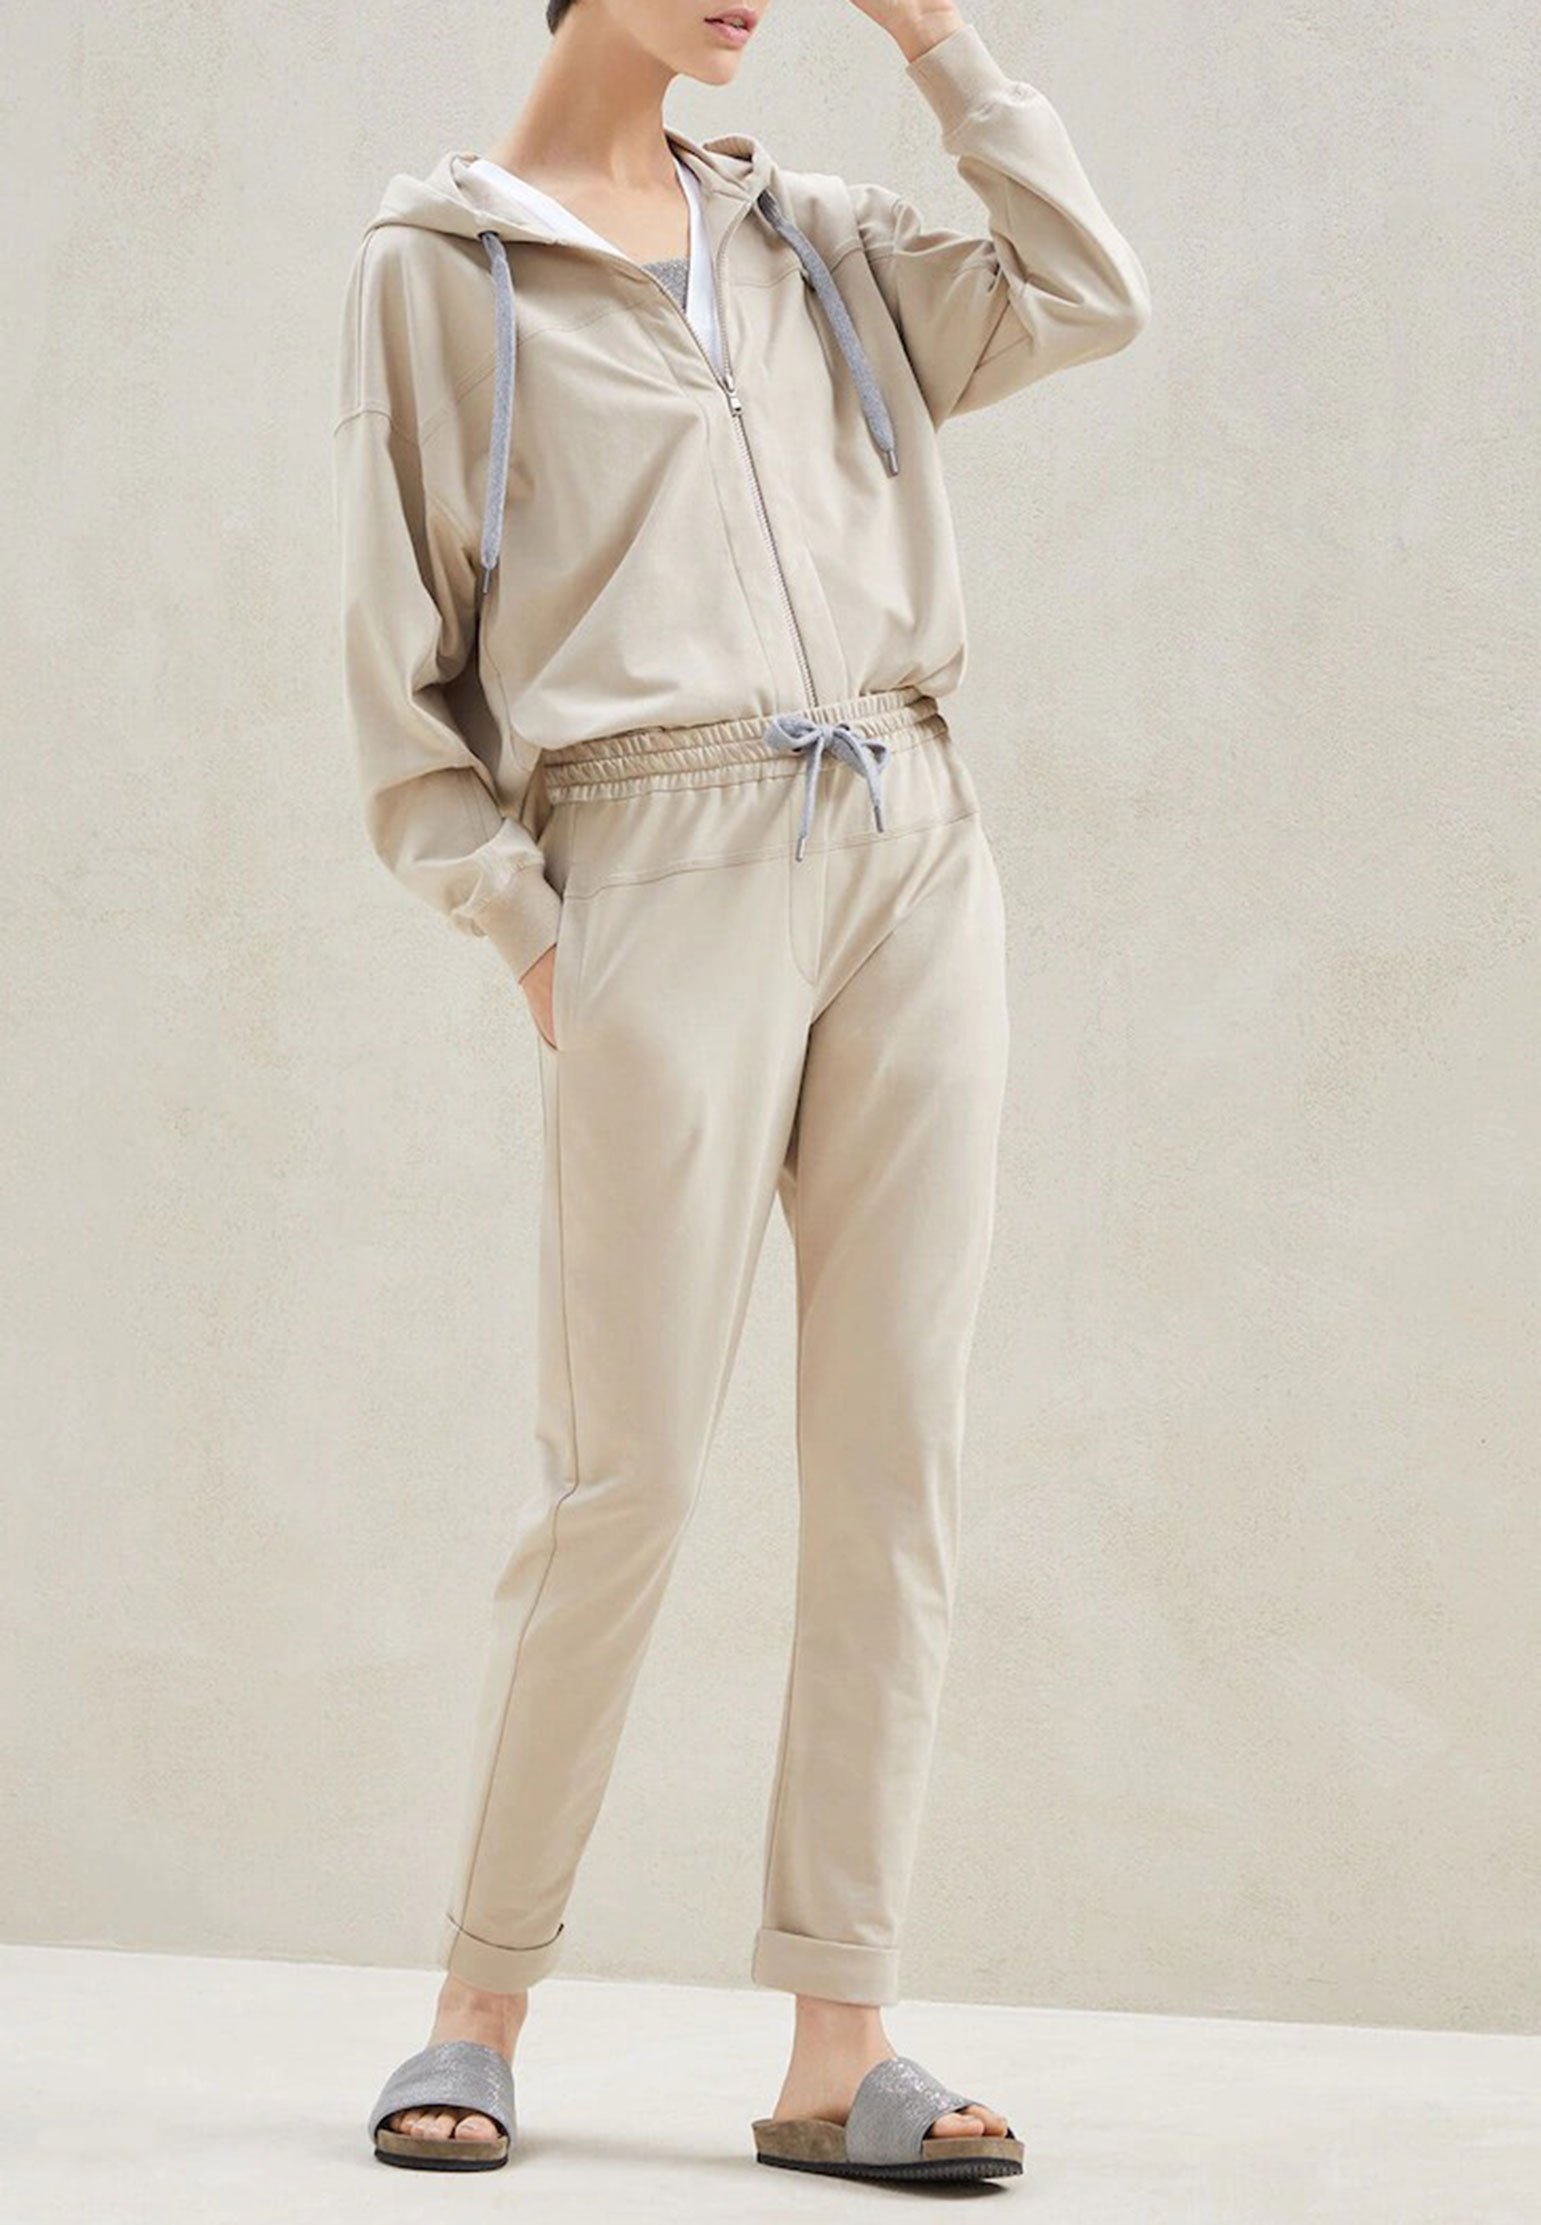 Cardigan BRUNELLO CUCINELLI Color: beige (Code: 420) in online store Allure